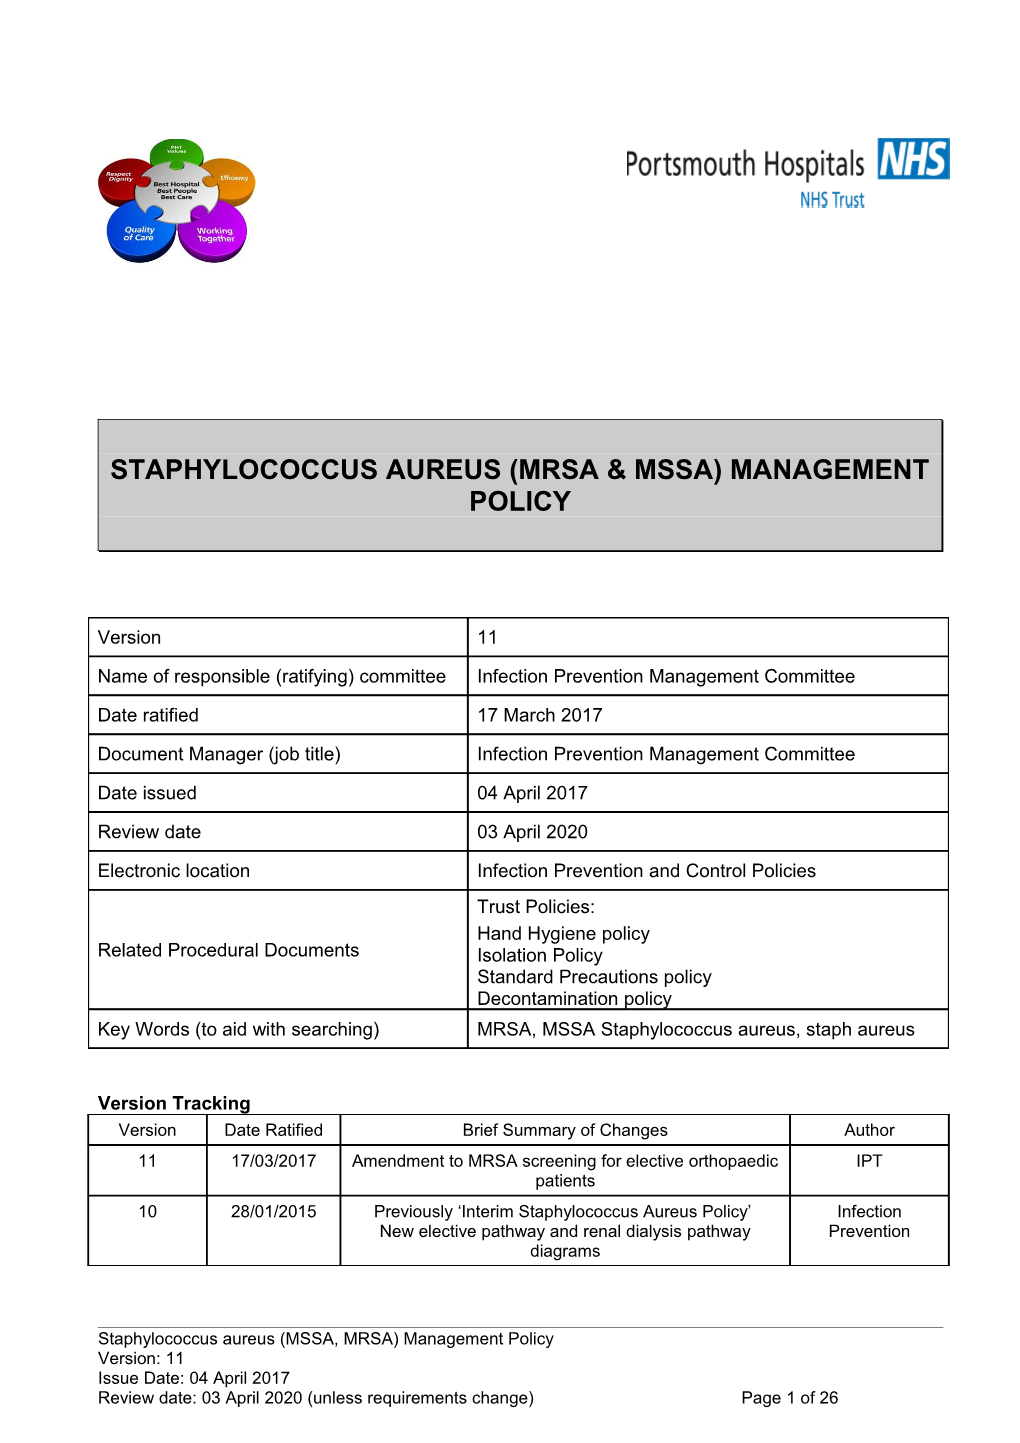 Staphylococcus Aureus (Mrsa & Mssa) Management Policy